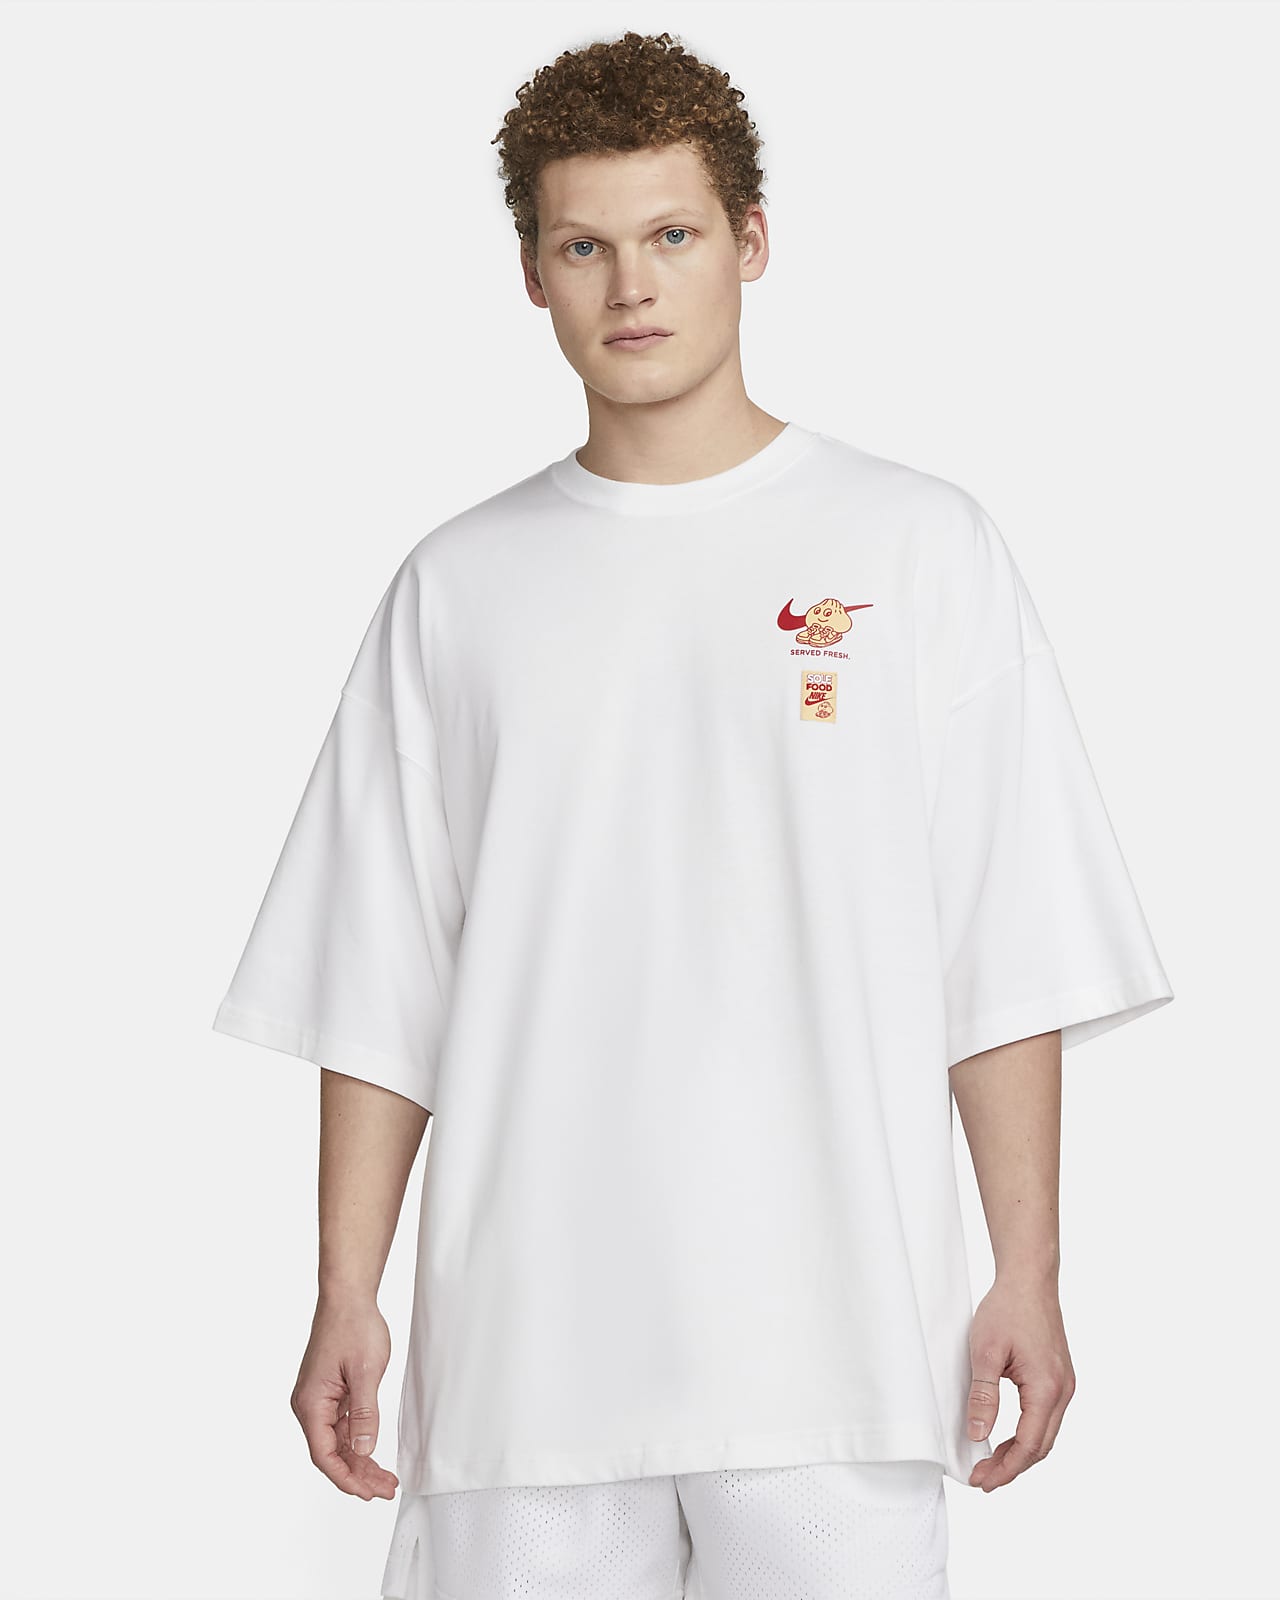 Nike Men's Shirt - Black - XXL